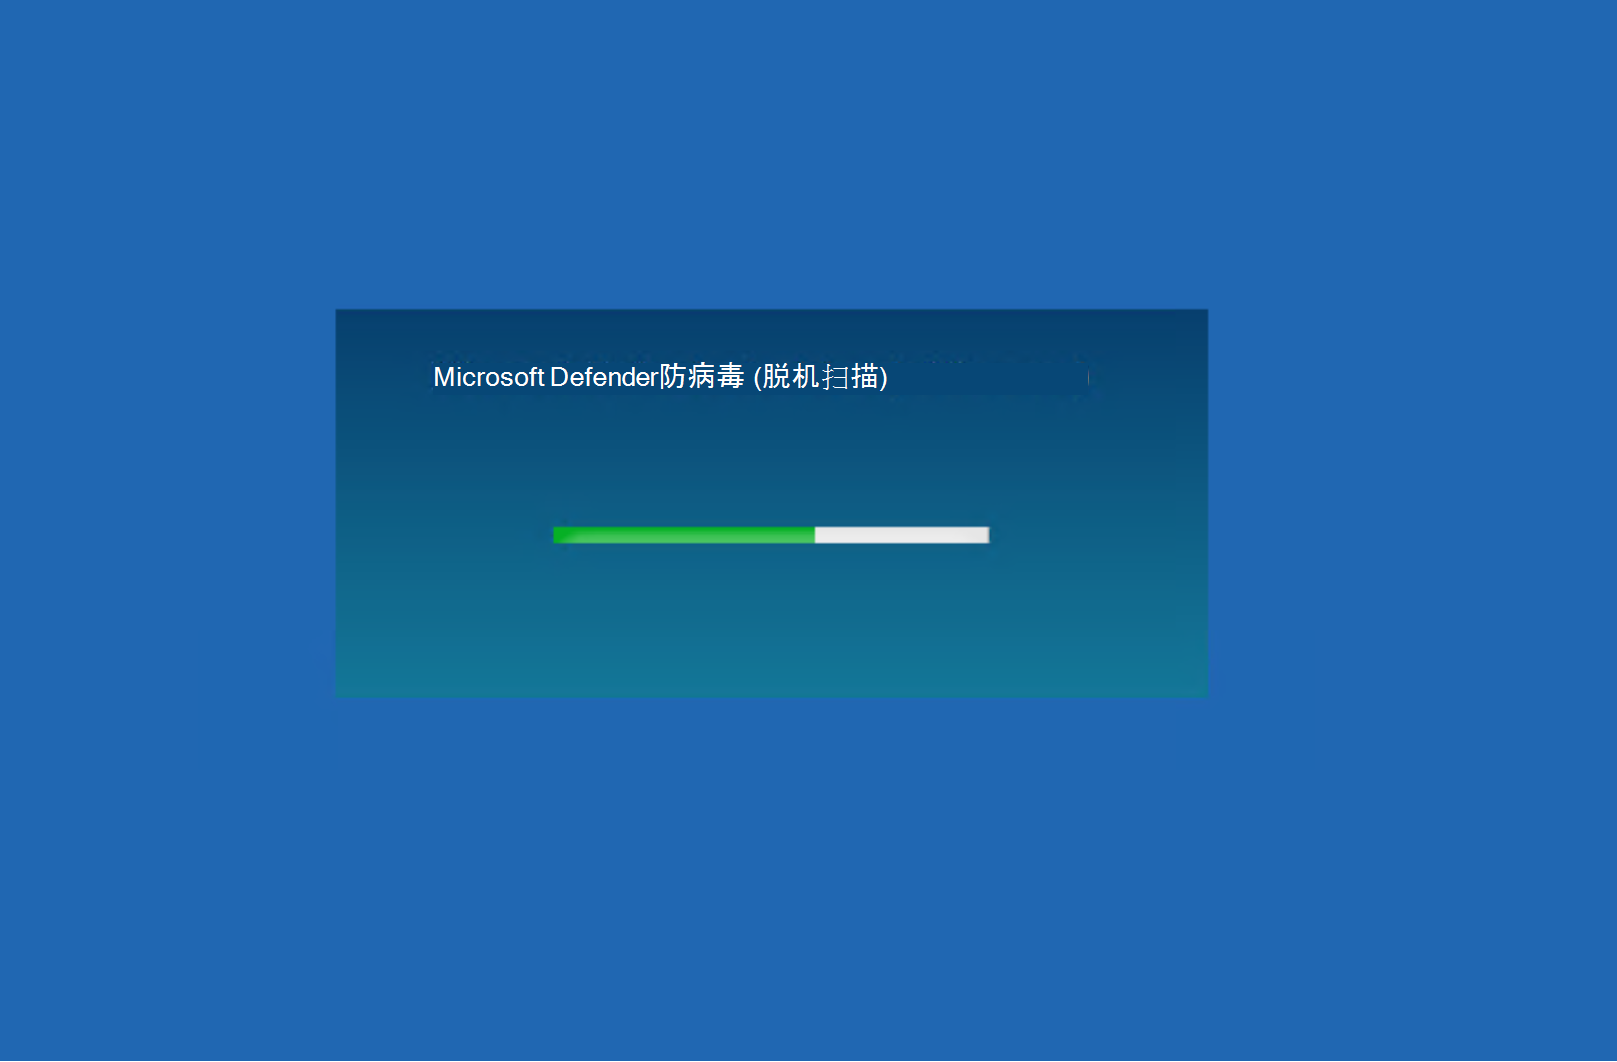 Microsoft Defender防病毒扫描的屏幕截图。